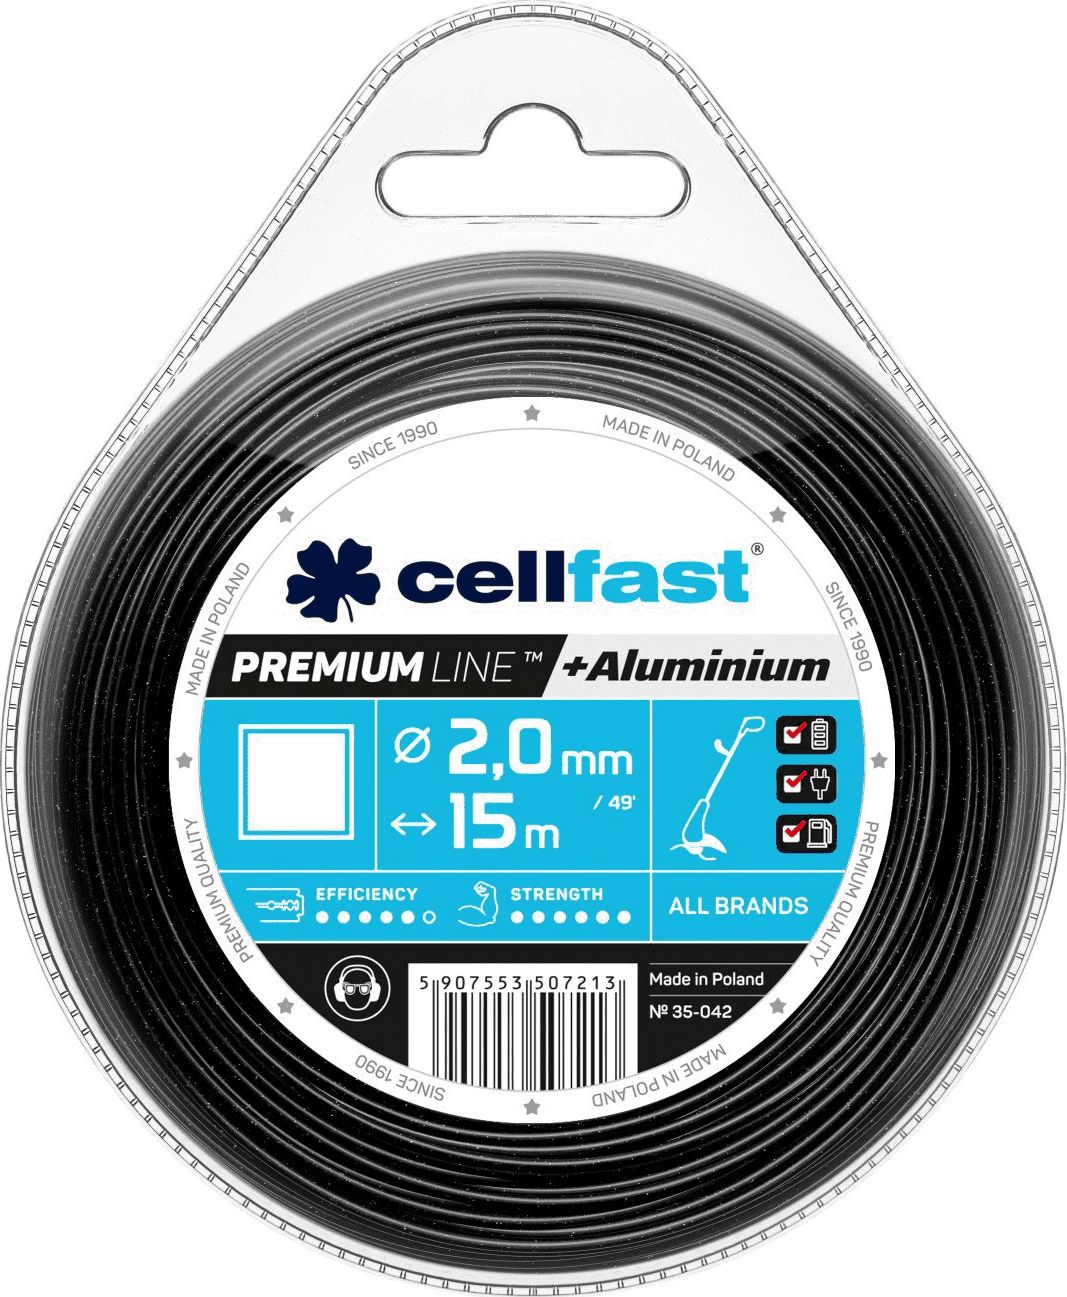 Cellfast zylka tnaca premium 2,0mm/15m kwadrat (35-042) 35-042 (5907553507213) Zāles pļāvējs - Trimmeris